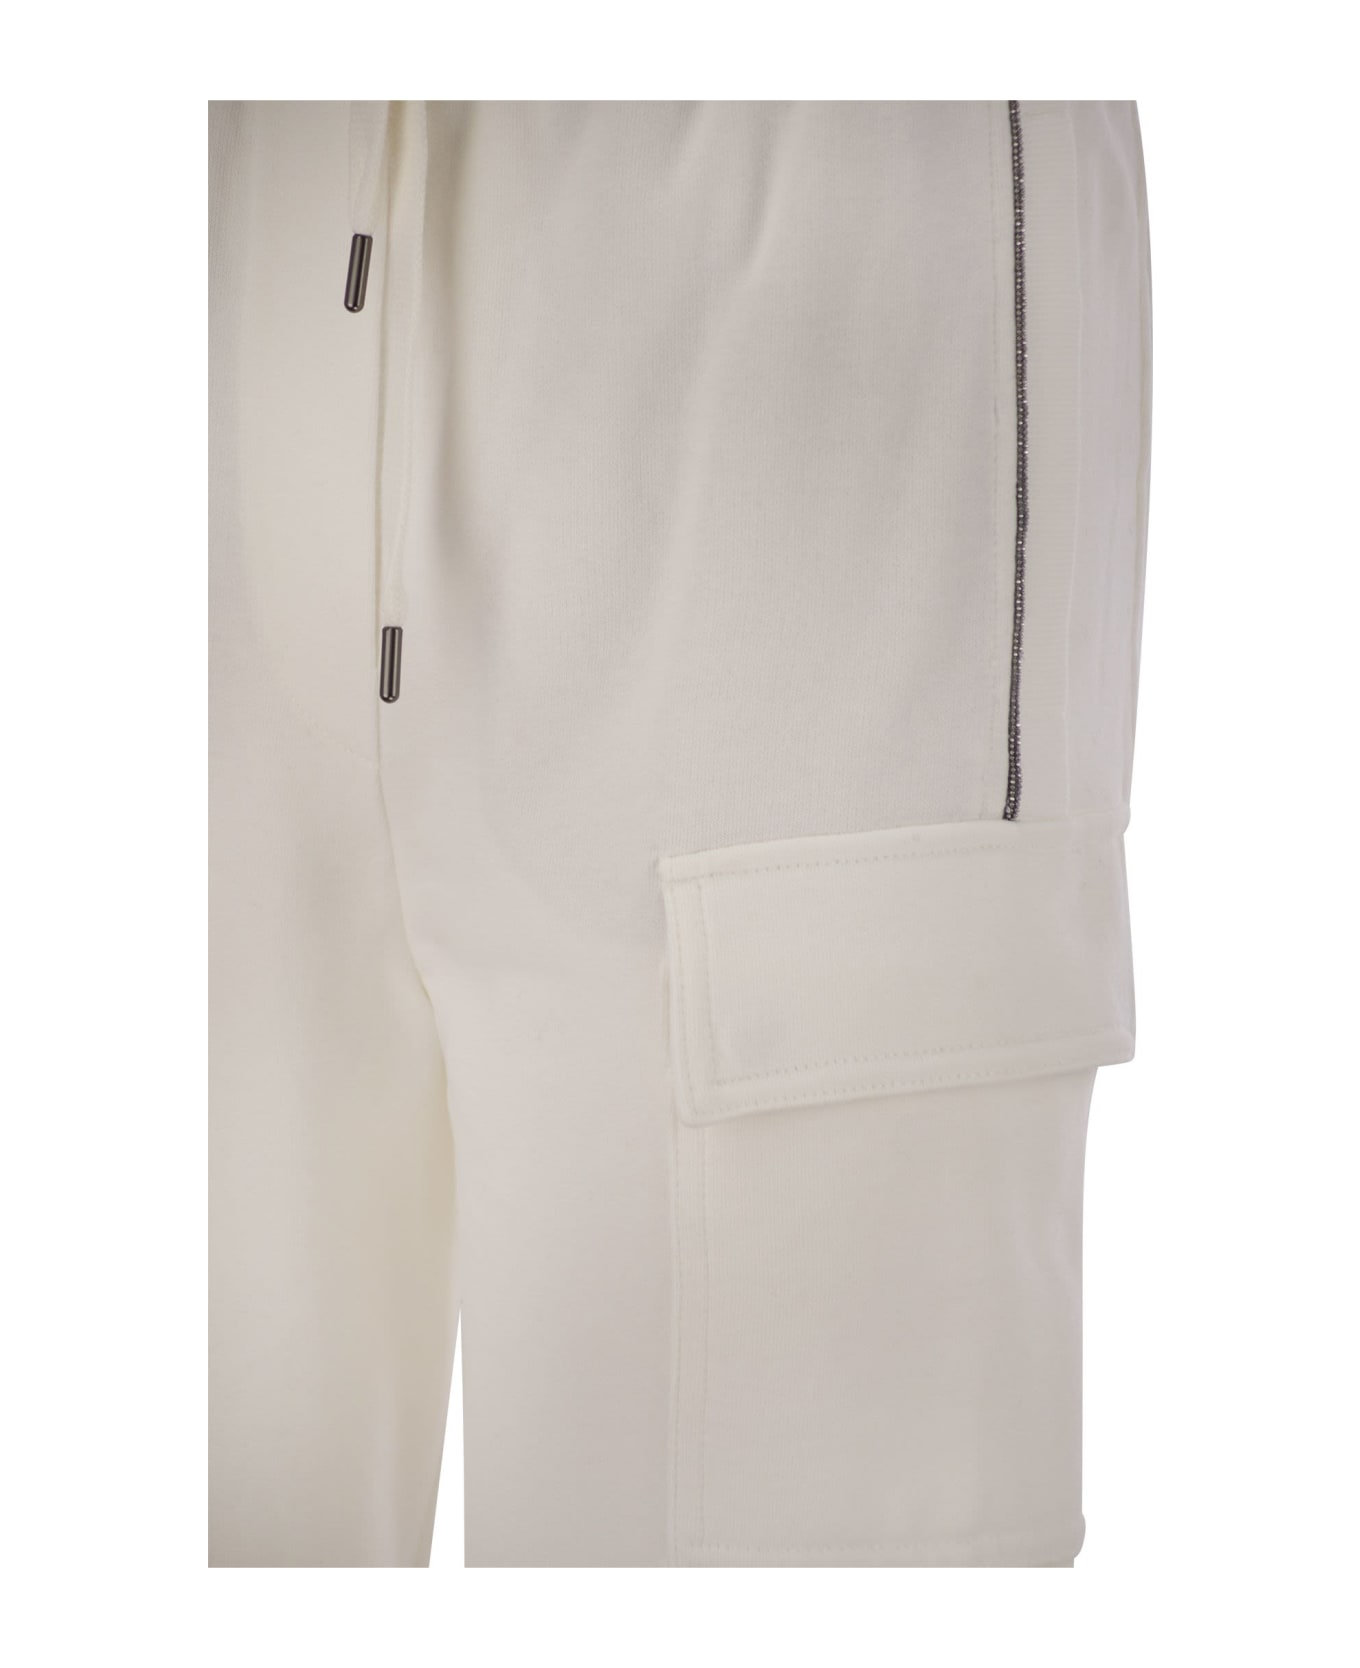 Brunello Cucinelli Smooth Cotton Fleece Cargo Pants - White